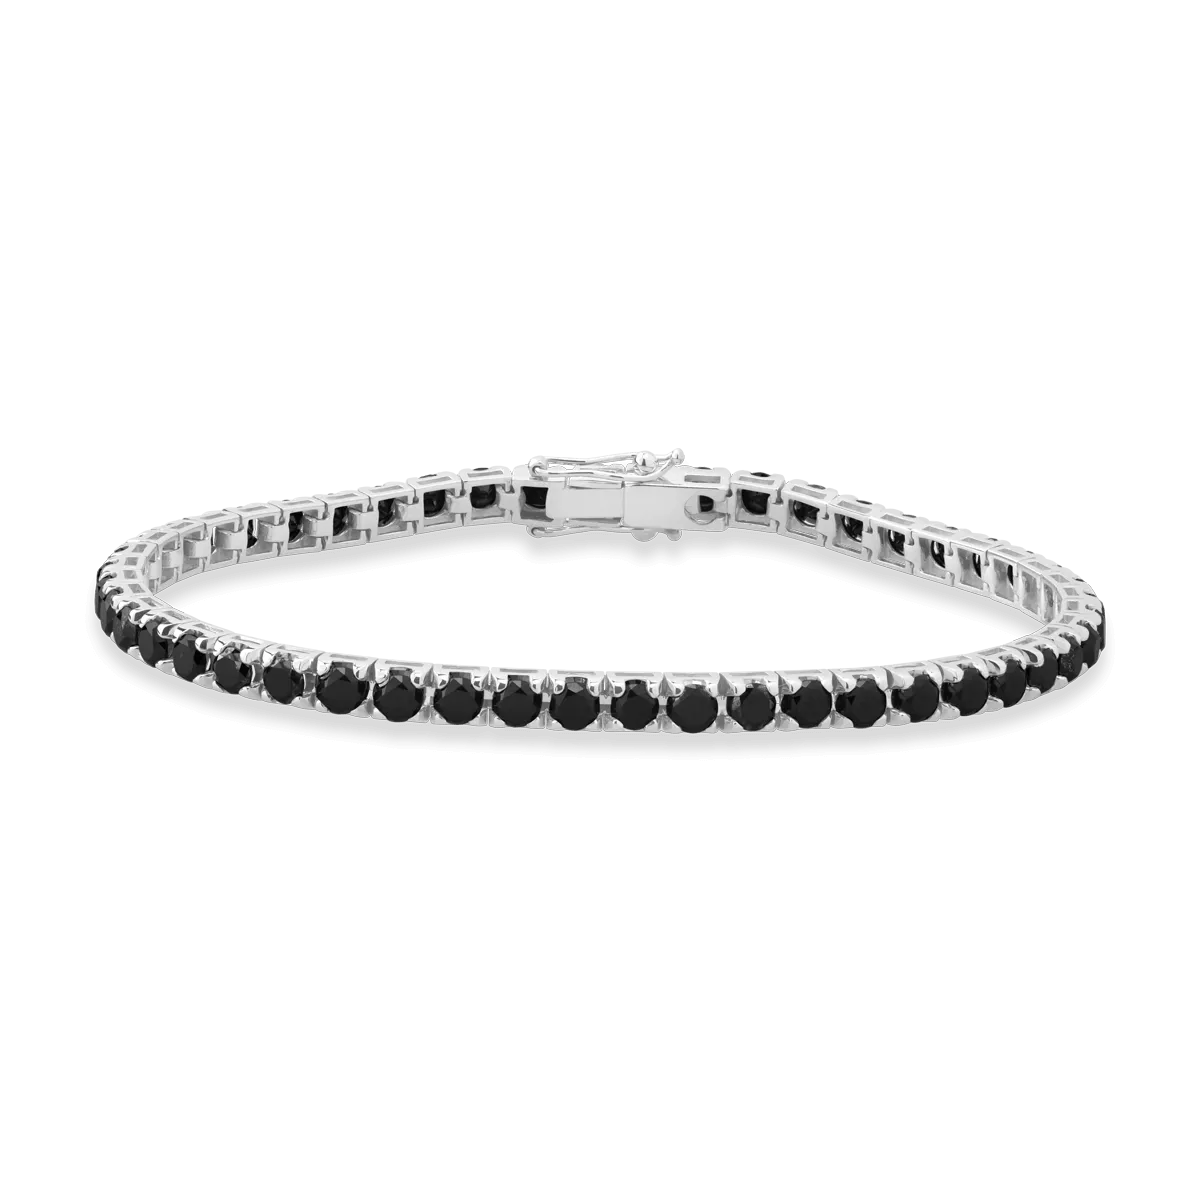 18K white gold tennis bracelet with 10.5ct black diamonds